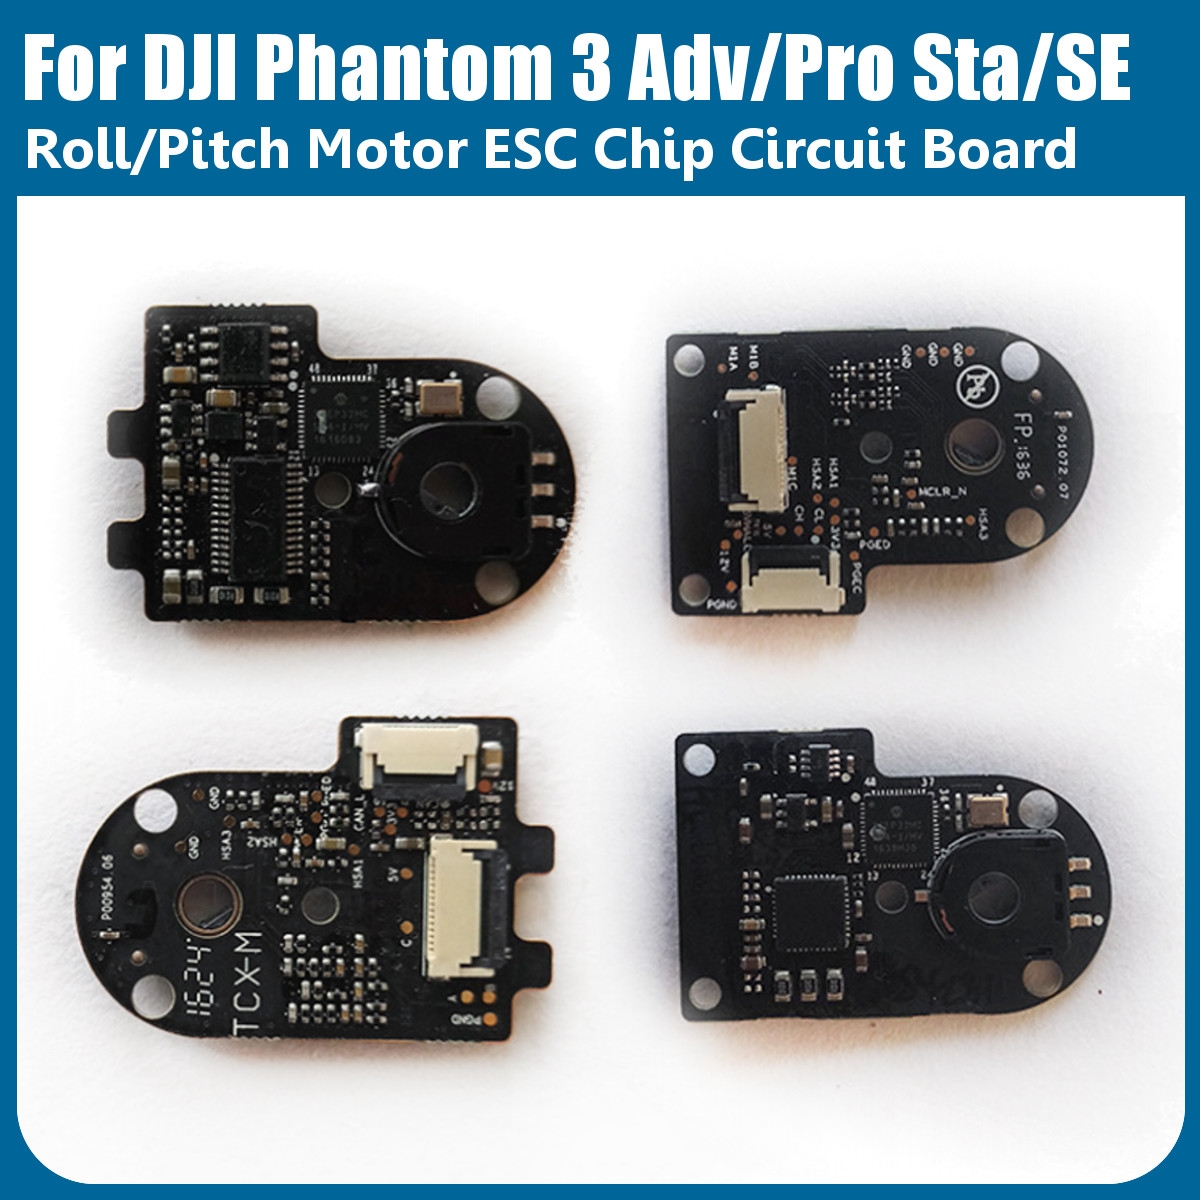 Roll/Pitch Motor ESC Chip Circuit Board RC Quadcopter Parts for DJI Phantom 3 Adv/Pro Sta/SE